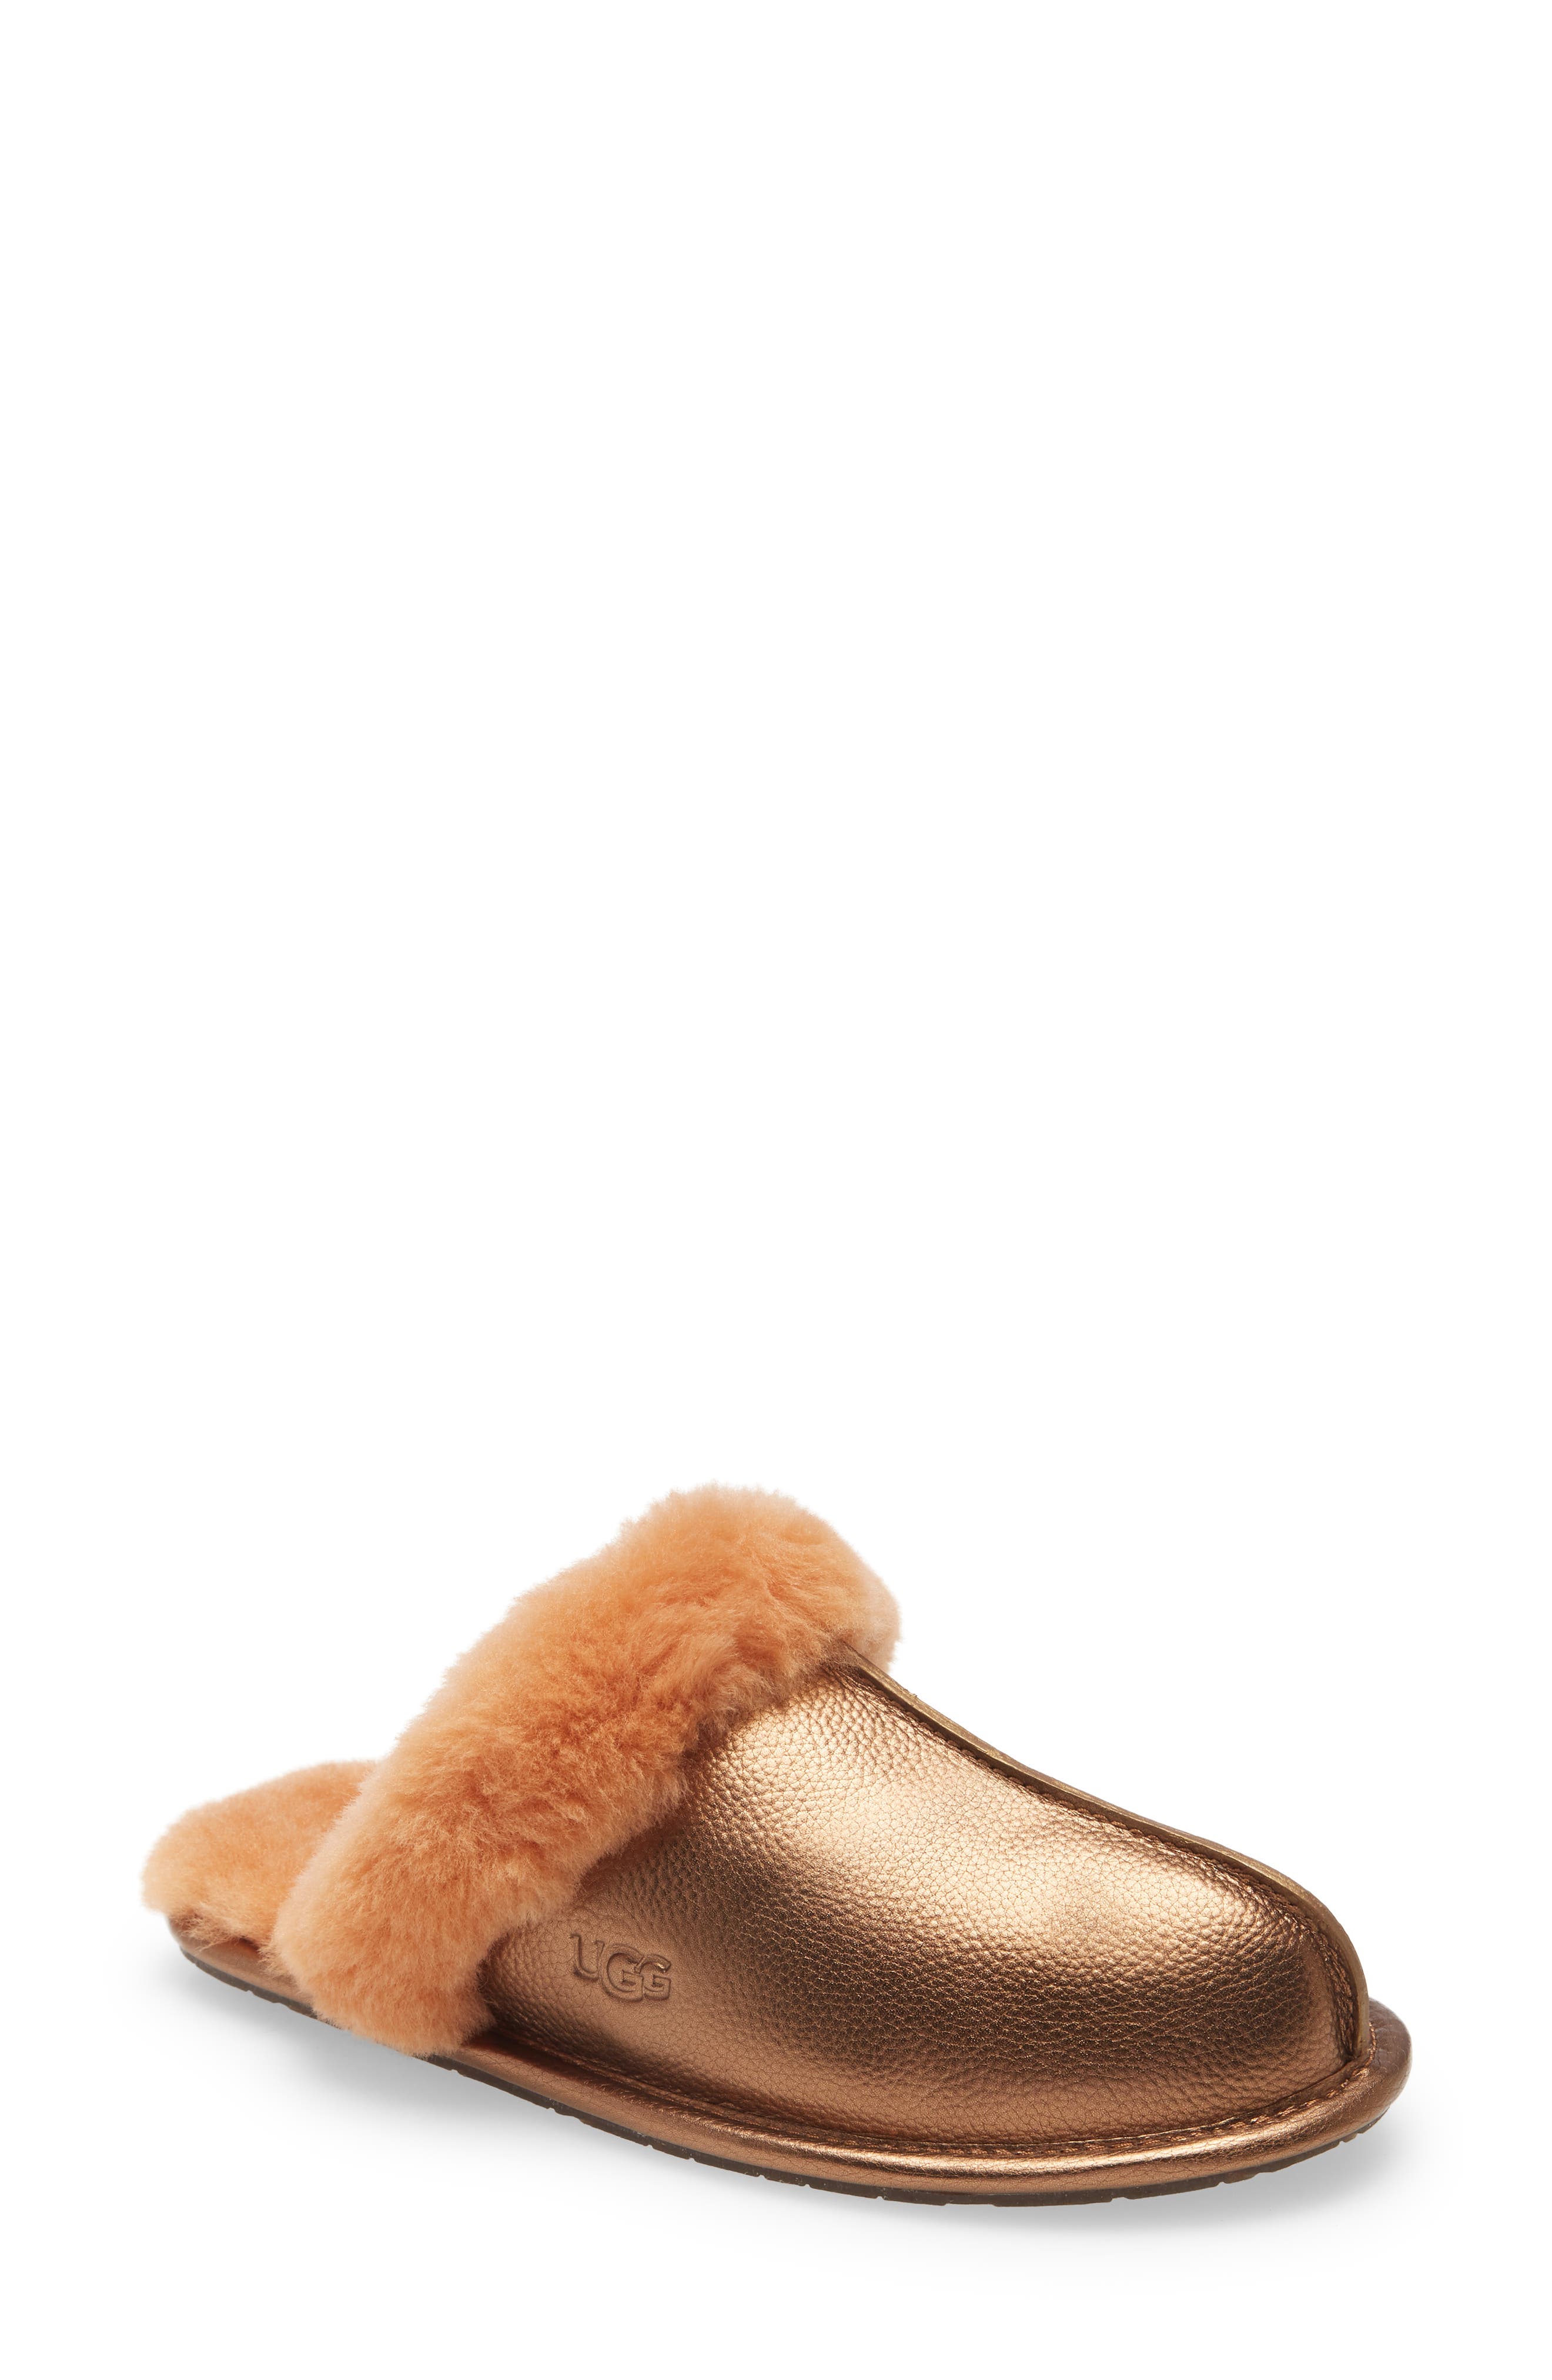 tan fuzzy slippers